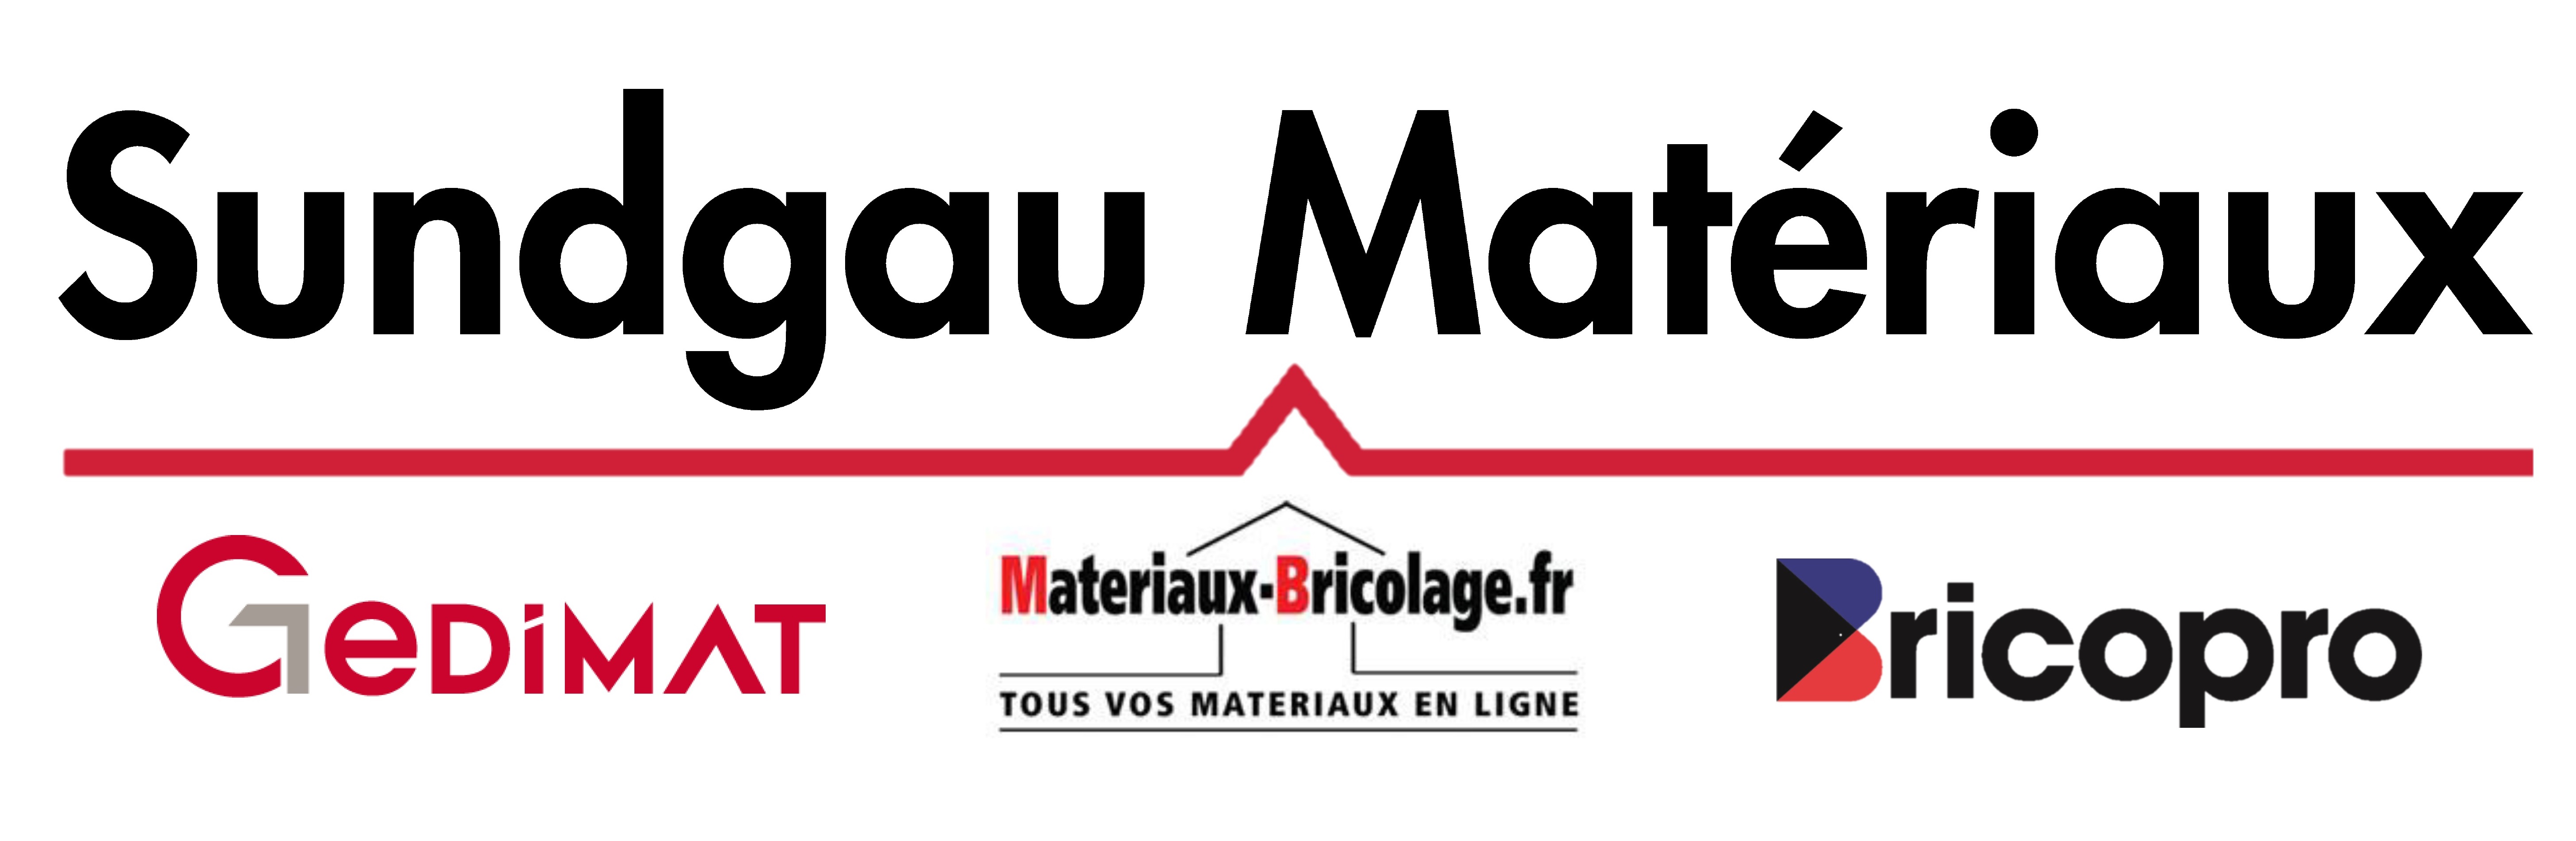 Logo Sundgau Matériaux